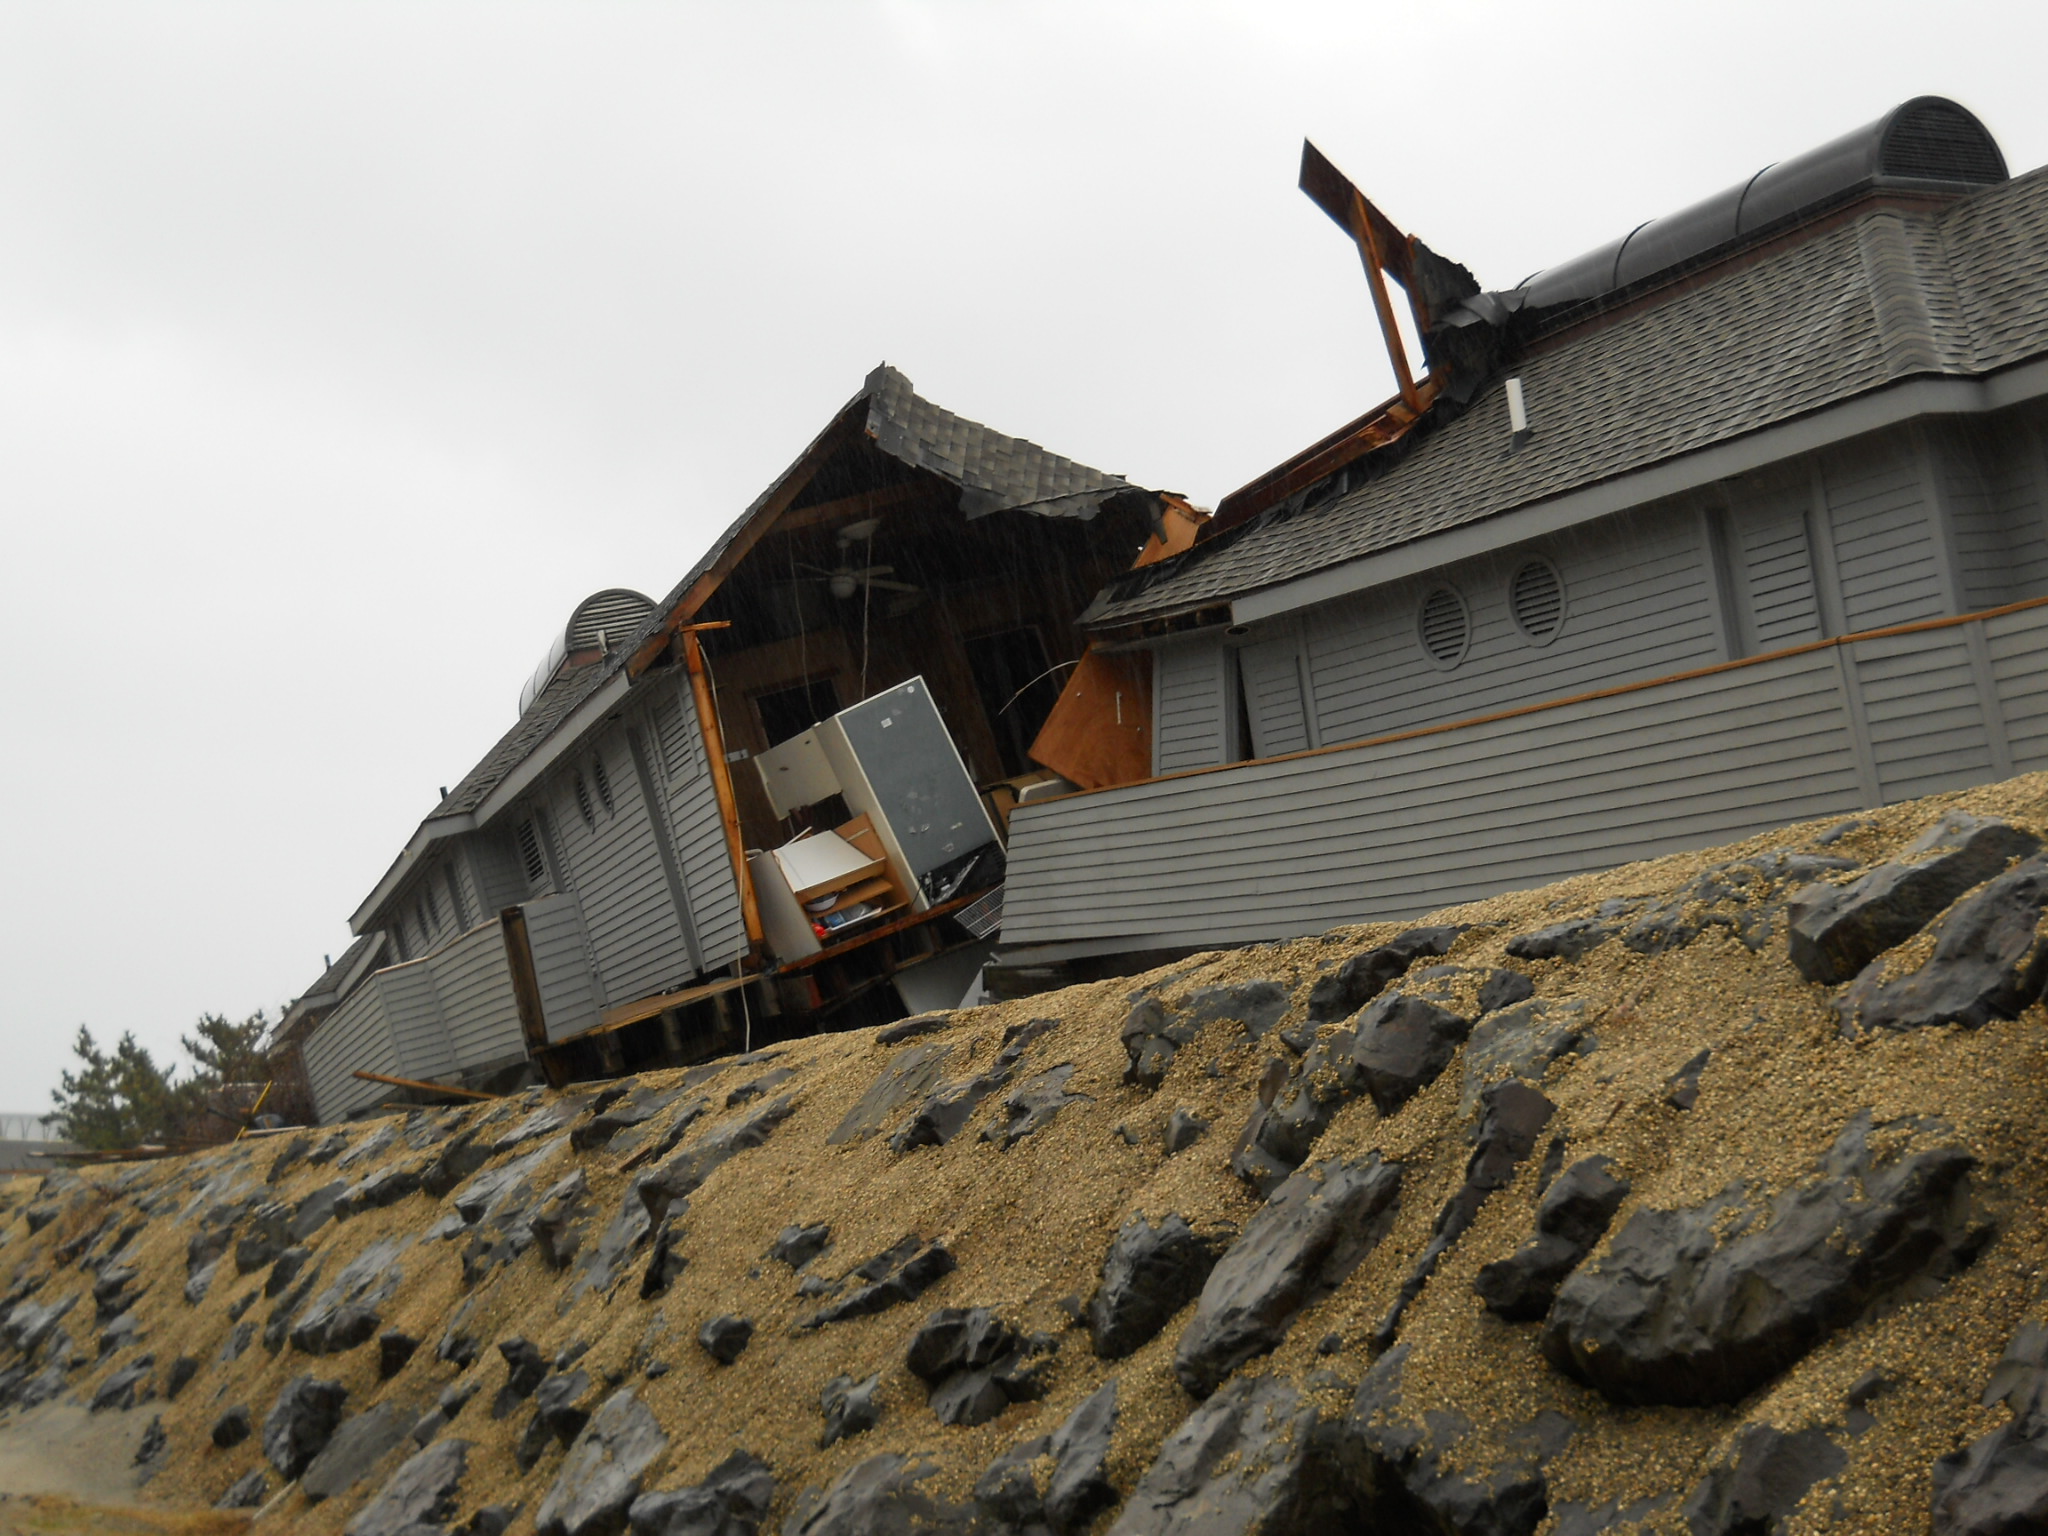 In the coastal town of Sea Bright, N.J., Hurricane Sandy tore buildings apart an